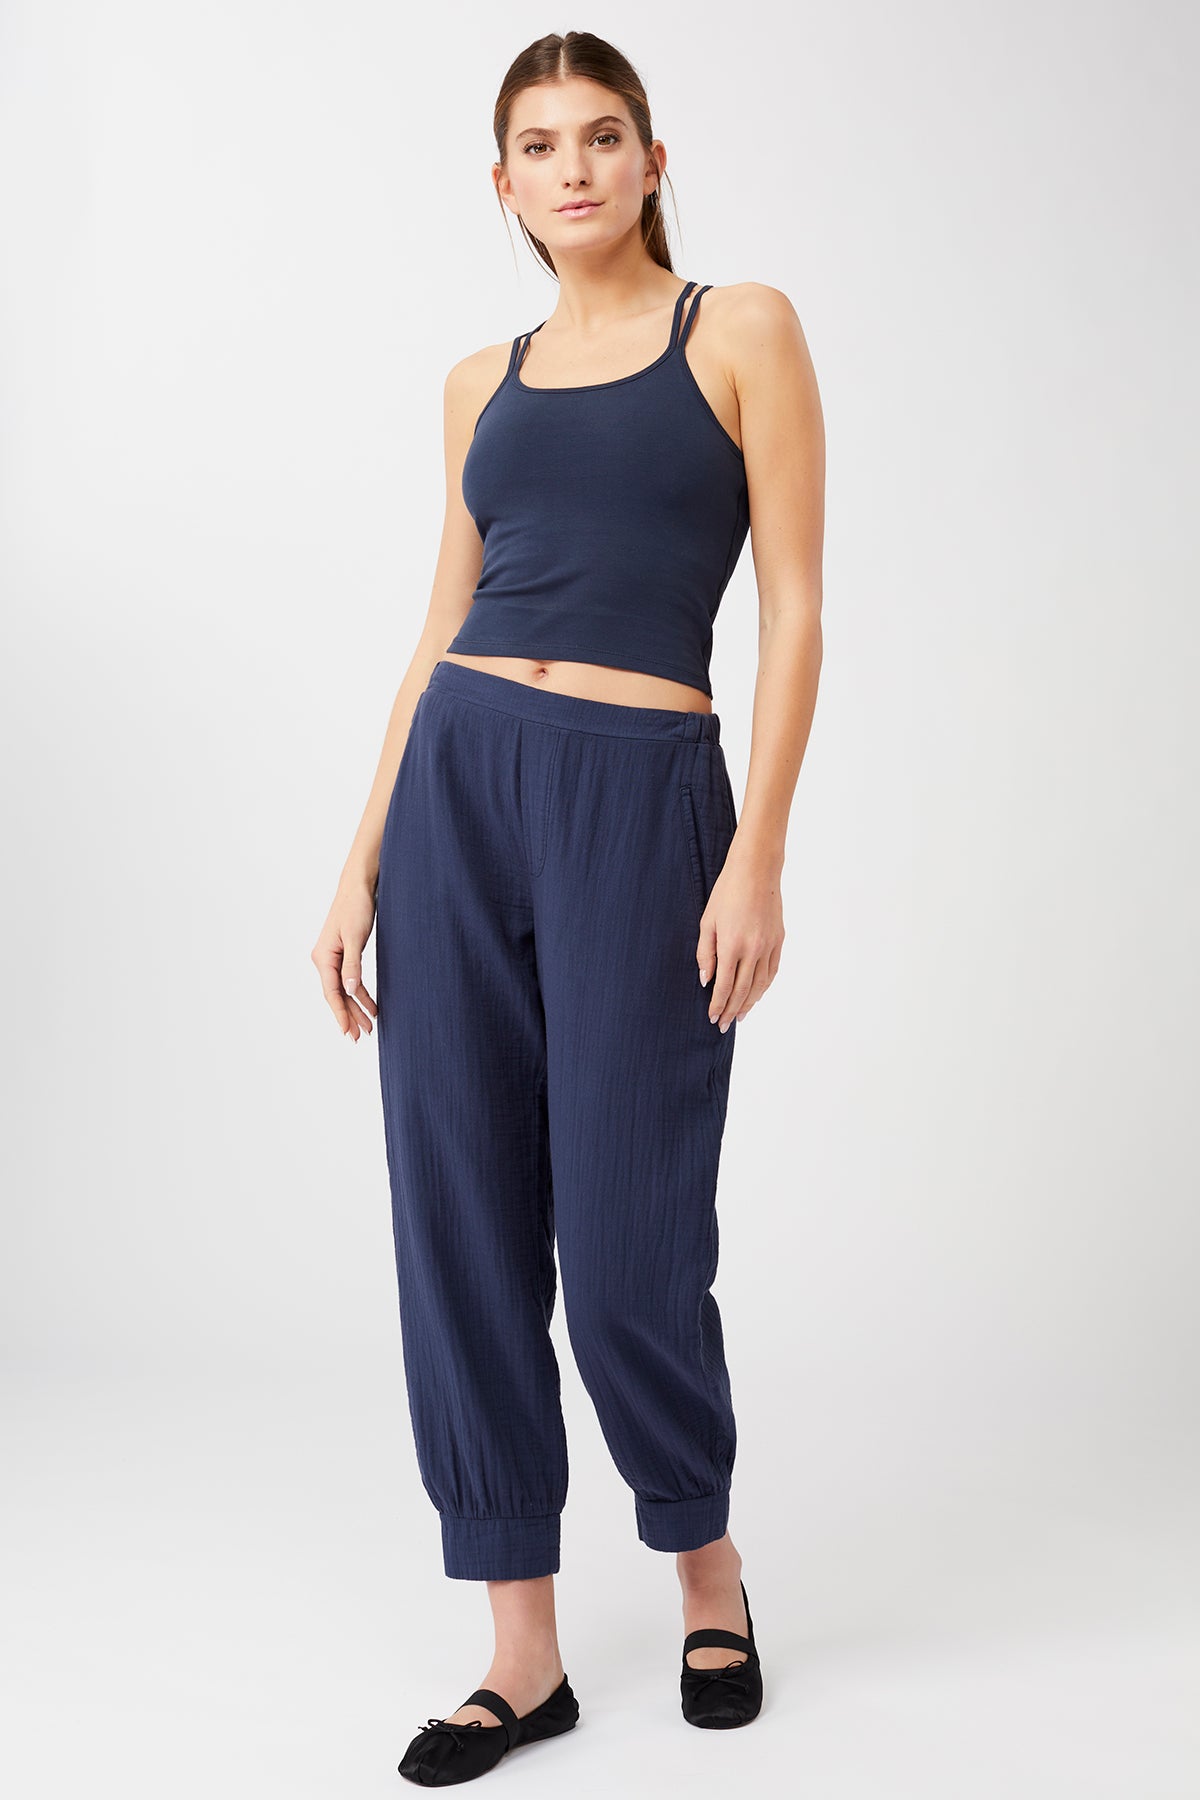 Mandala Yoga Top Blau Outfit Front - Double Strap Top